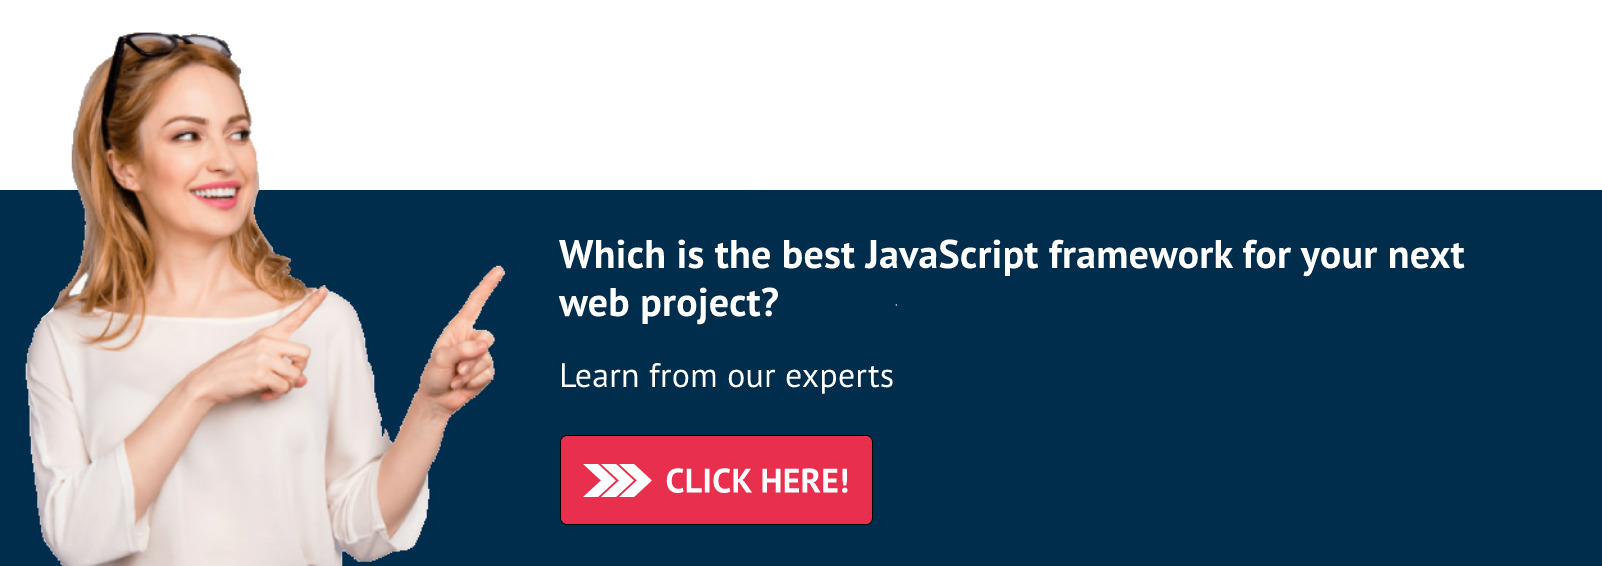 best-JavaScript-framework-CTA